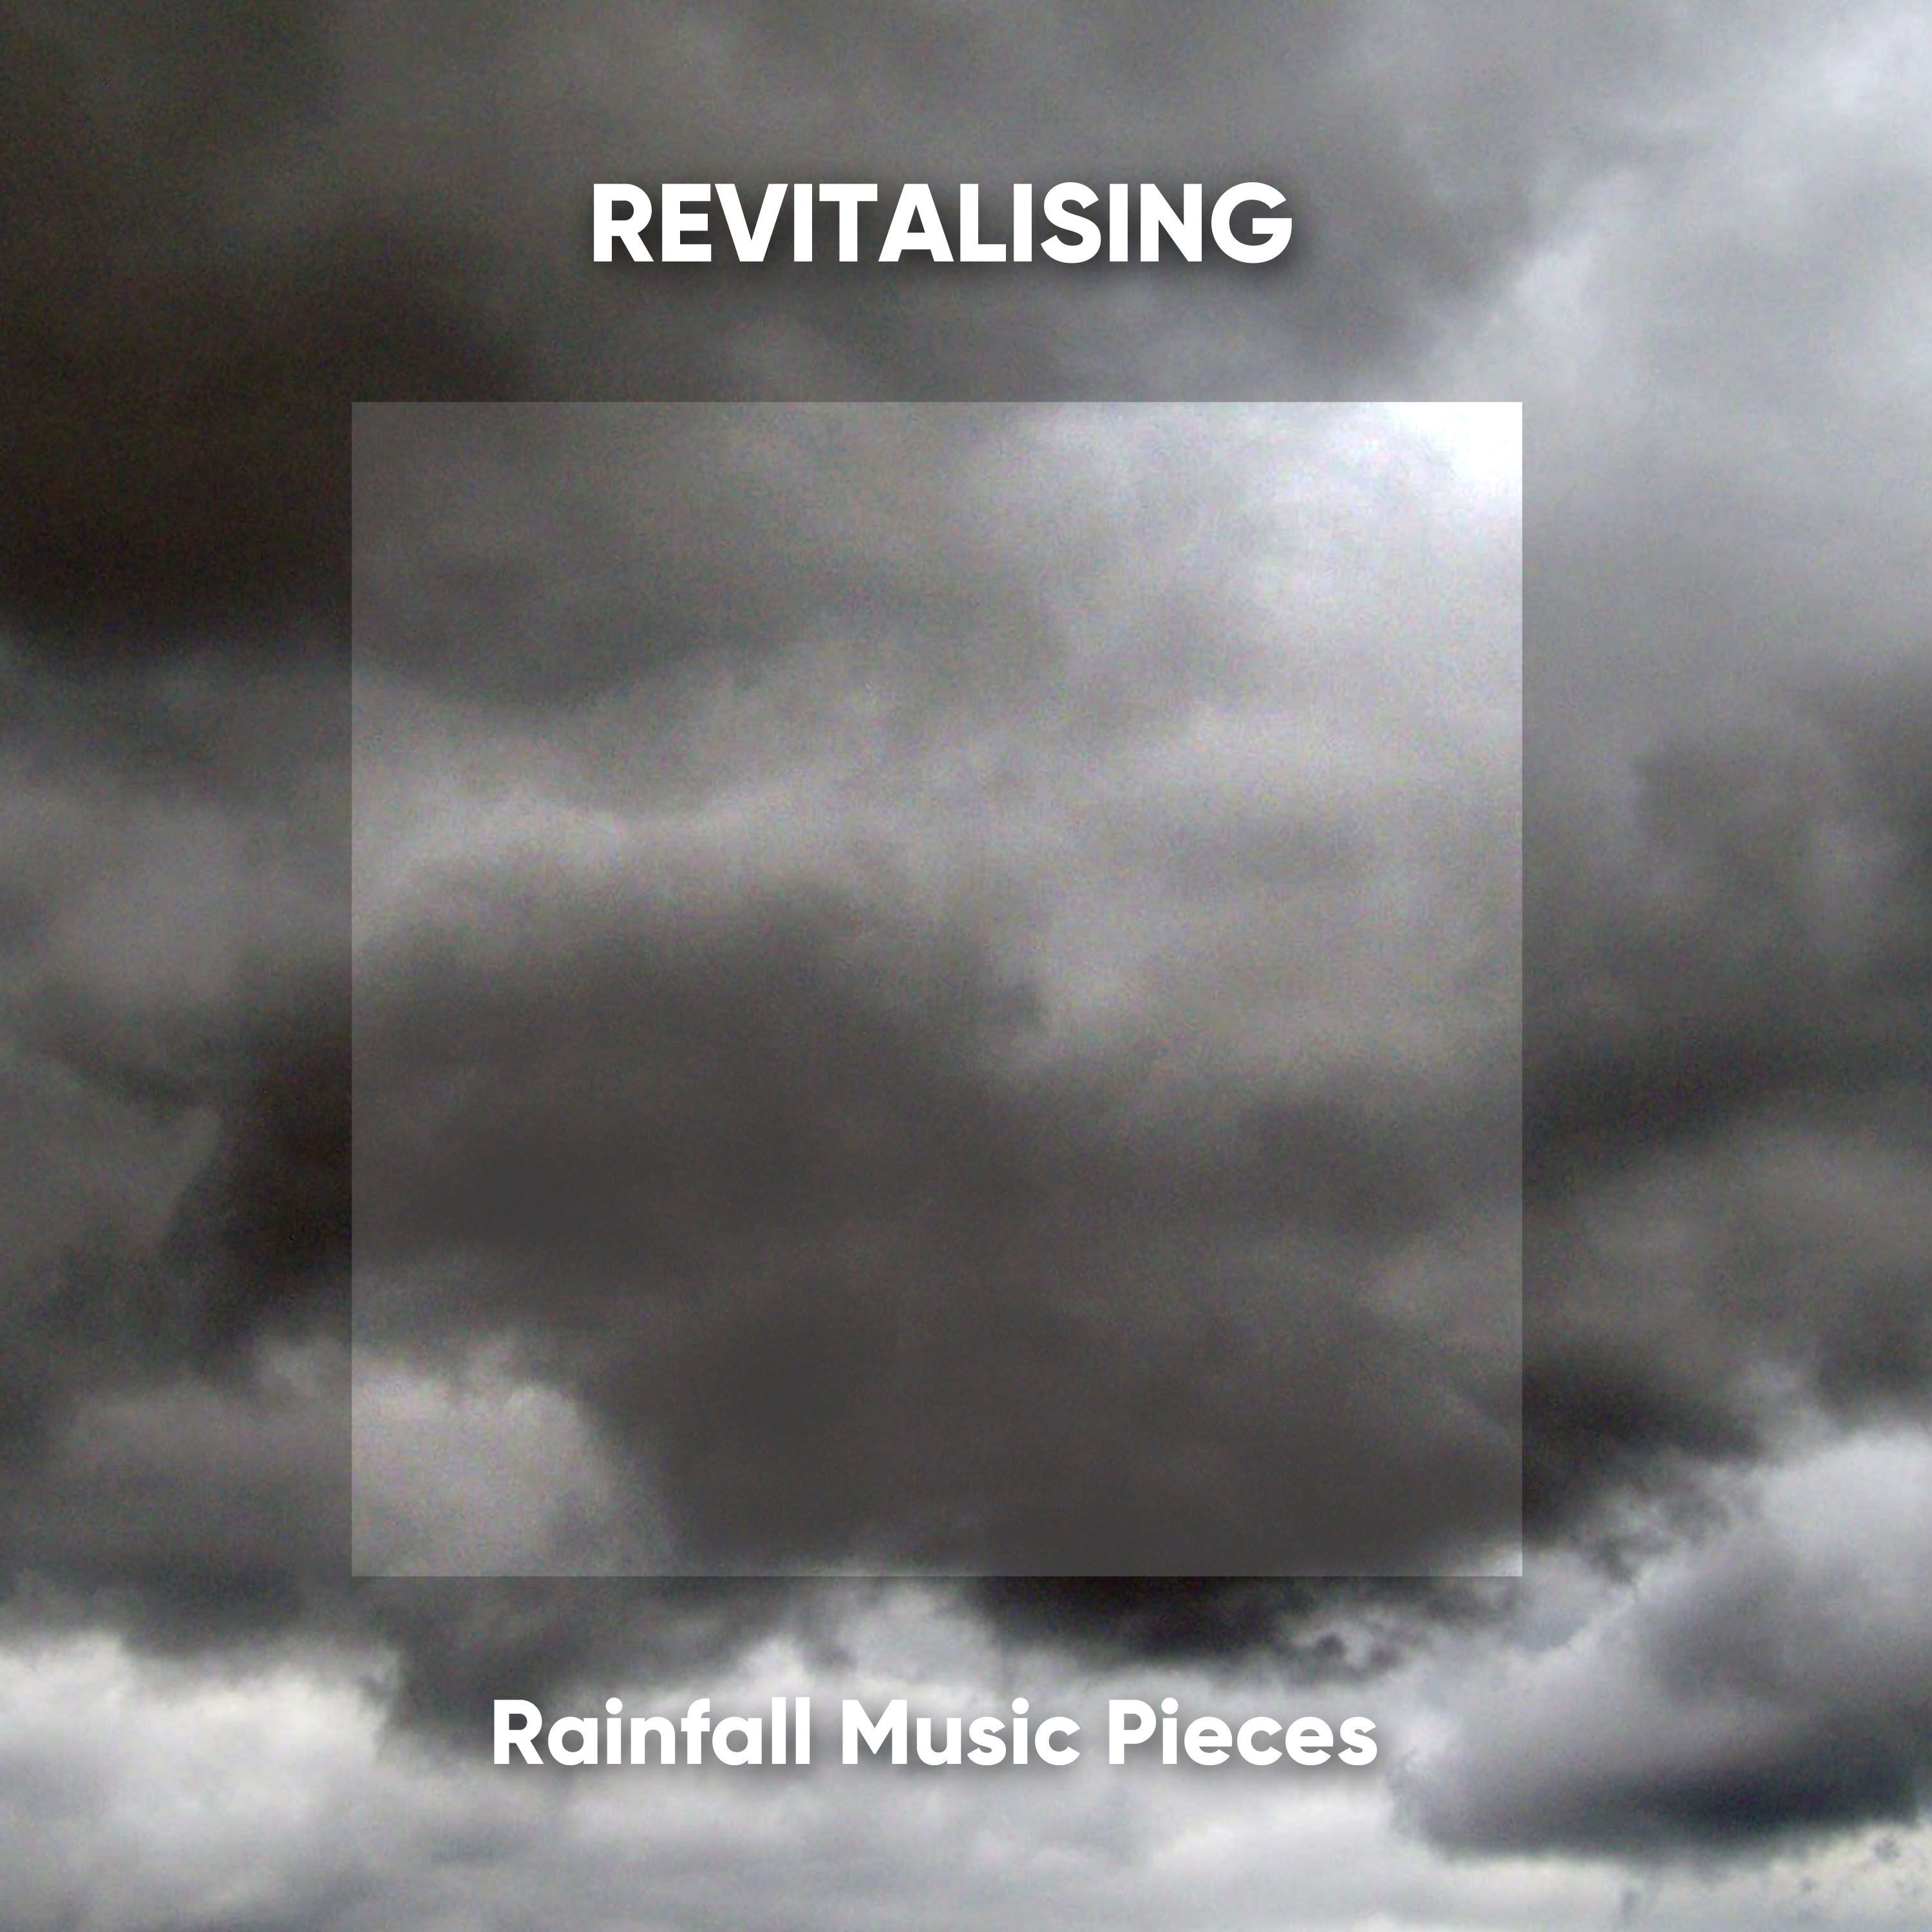 Revitalising Rainfall Music Pieces